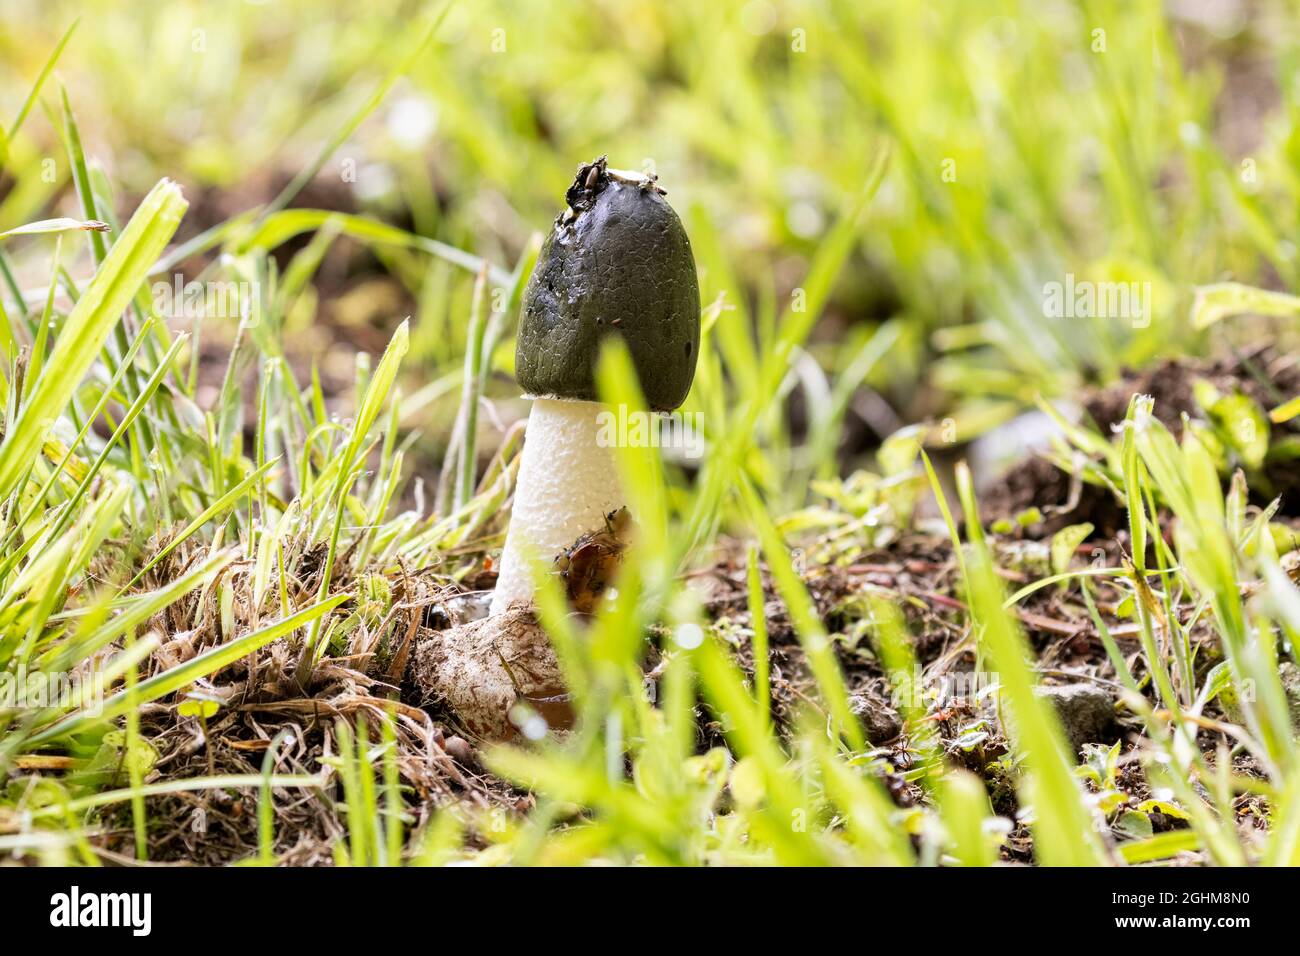 Stinkhorn (Phallus impudicus) fungus growing amongst grass, with small invertebrates feeding on the gleba. Stock Photo